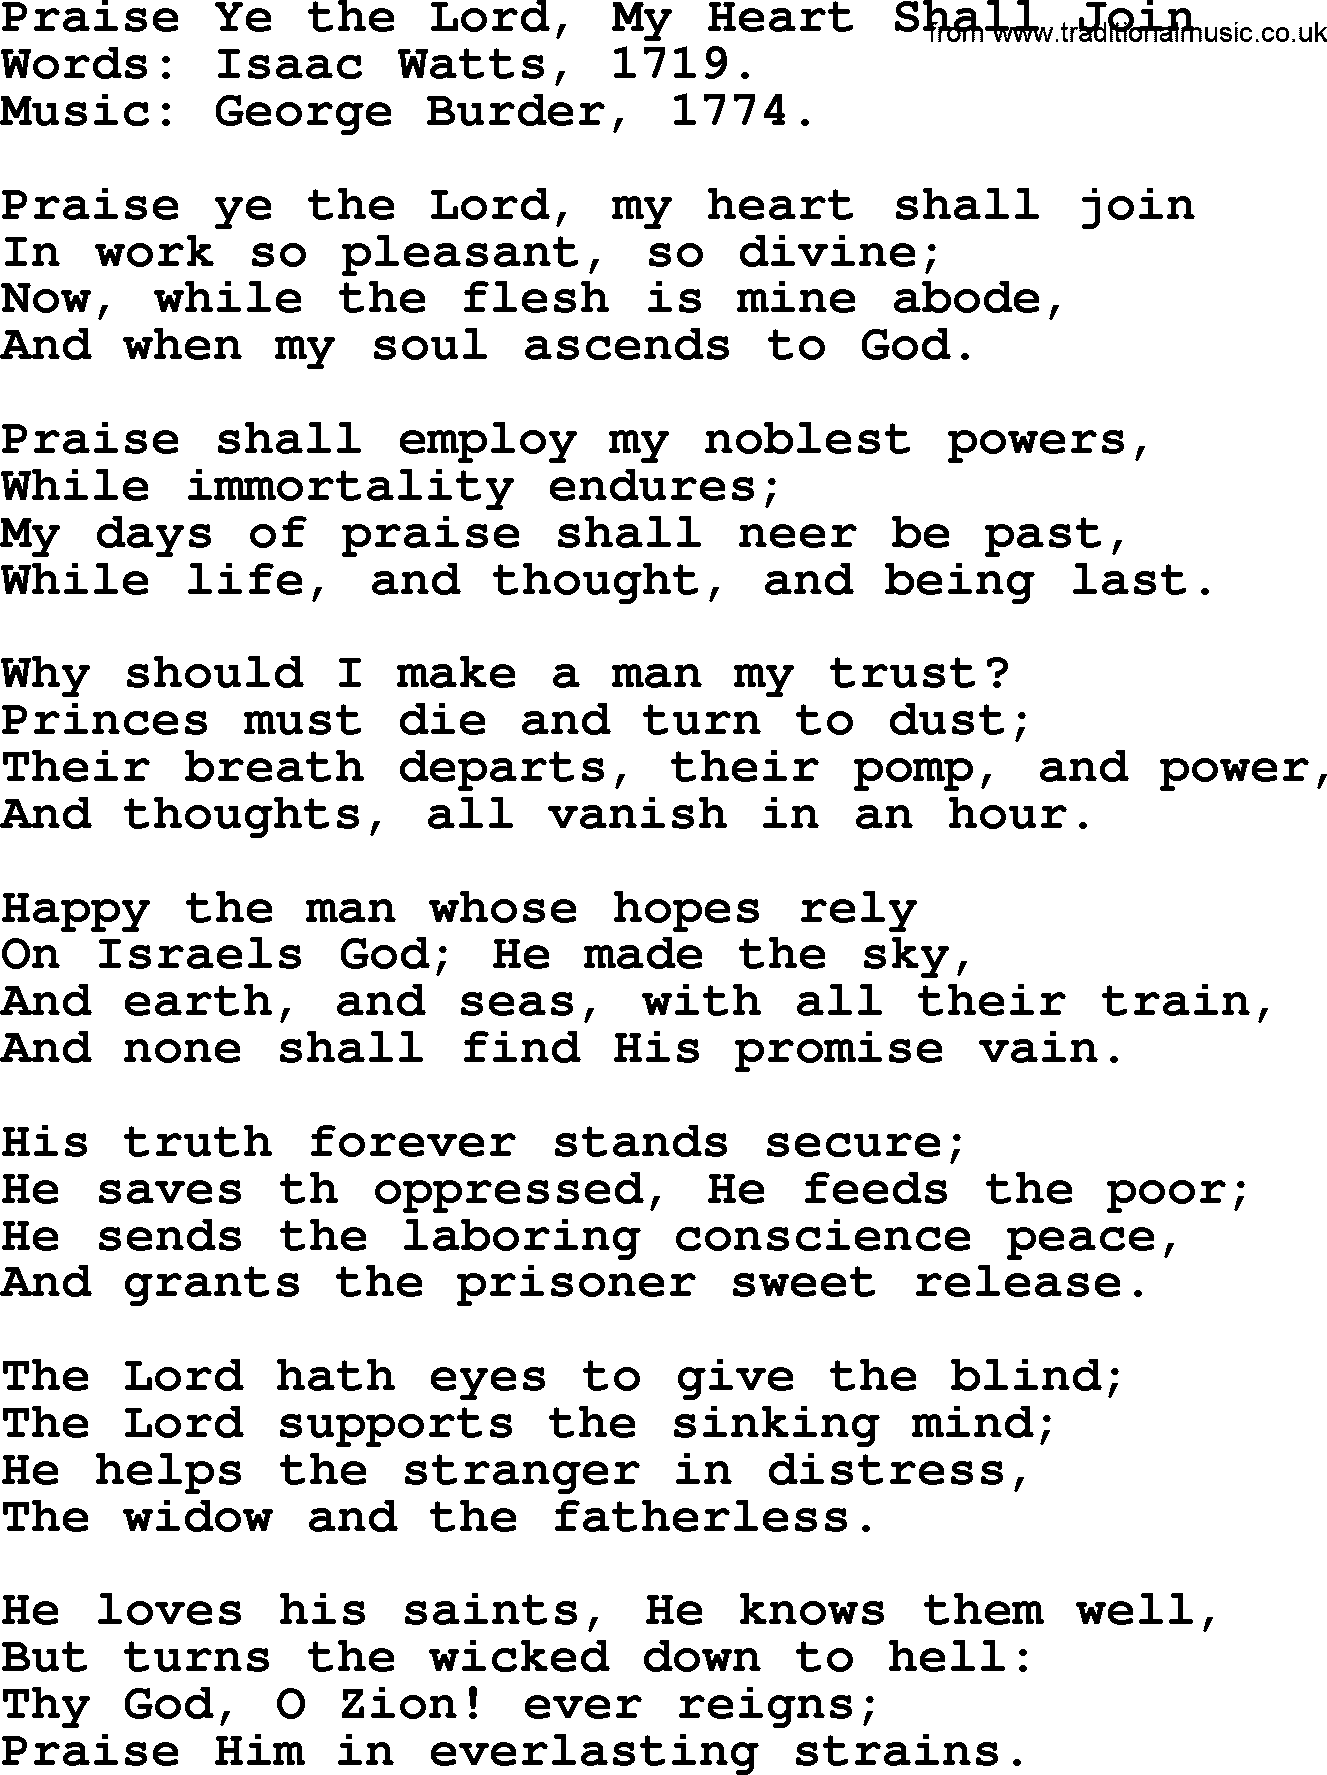 Isaac Watts Christian hymn: Praise Ye the Lord, My Heart Shall Join- lyricss